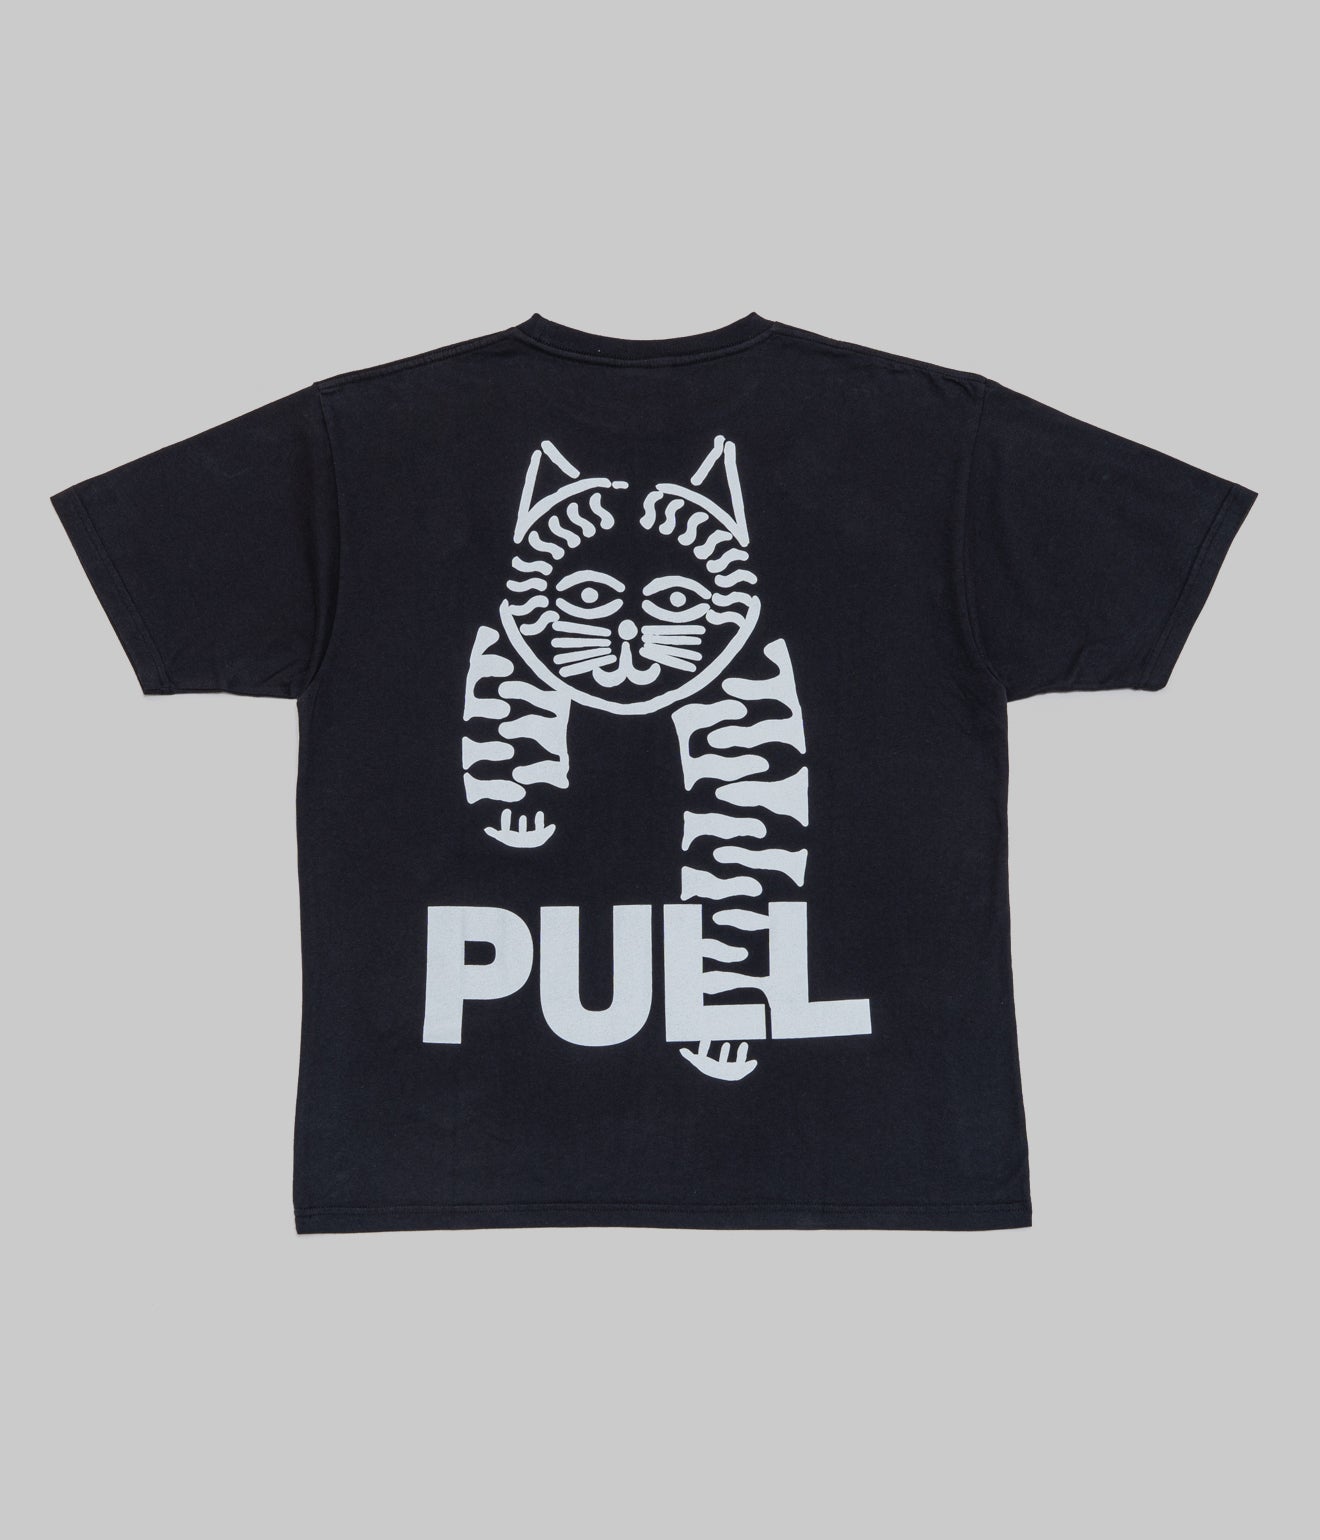 Public Possession "PUSH/PULL" T-Shirt Black - WEAREALLANIMALS